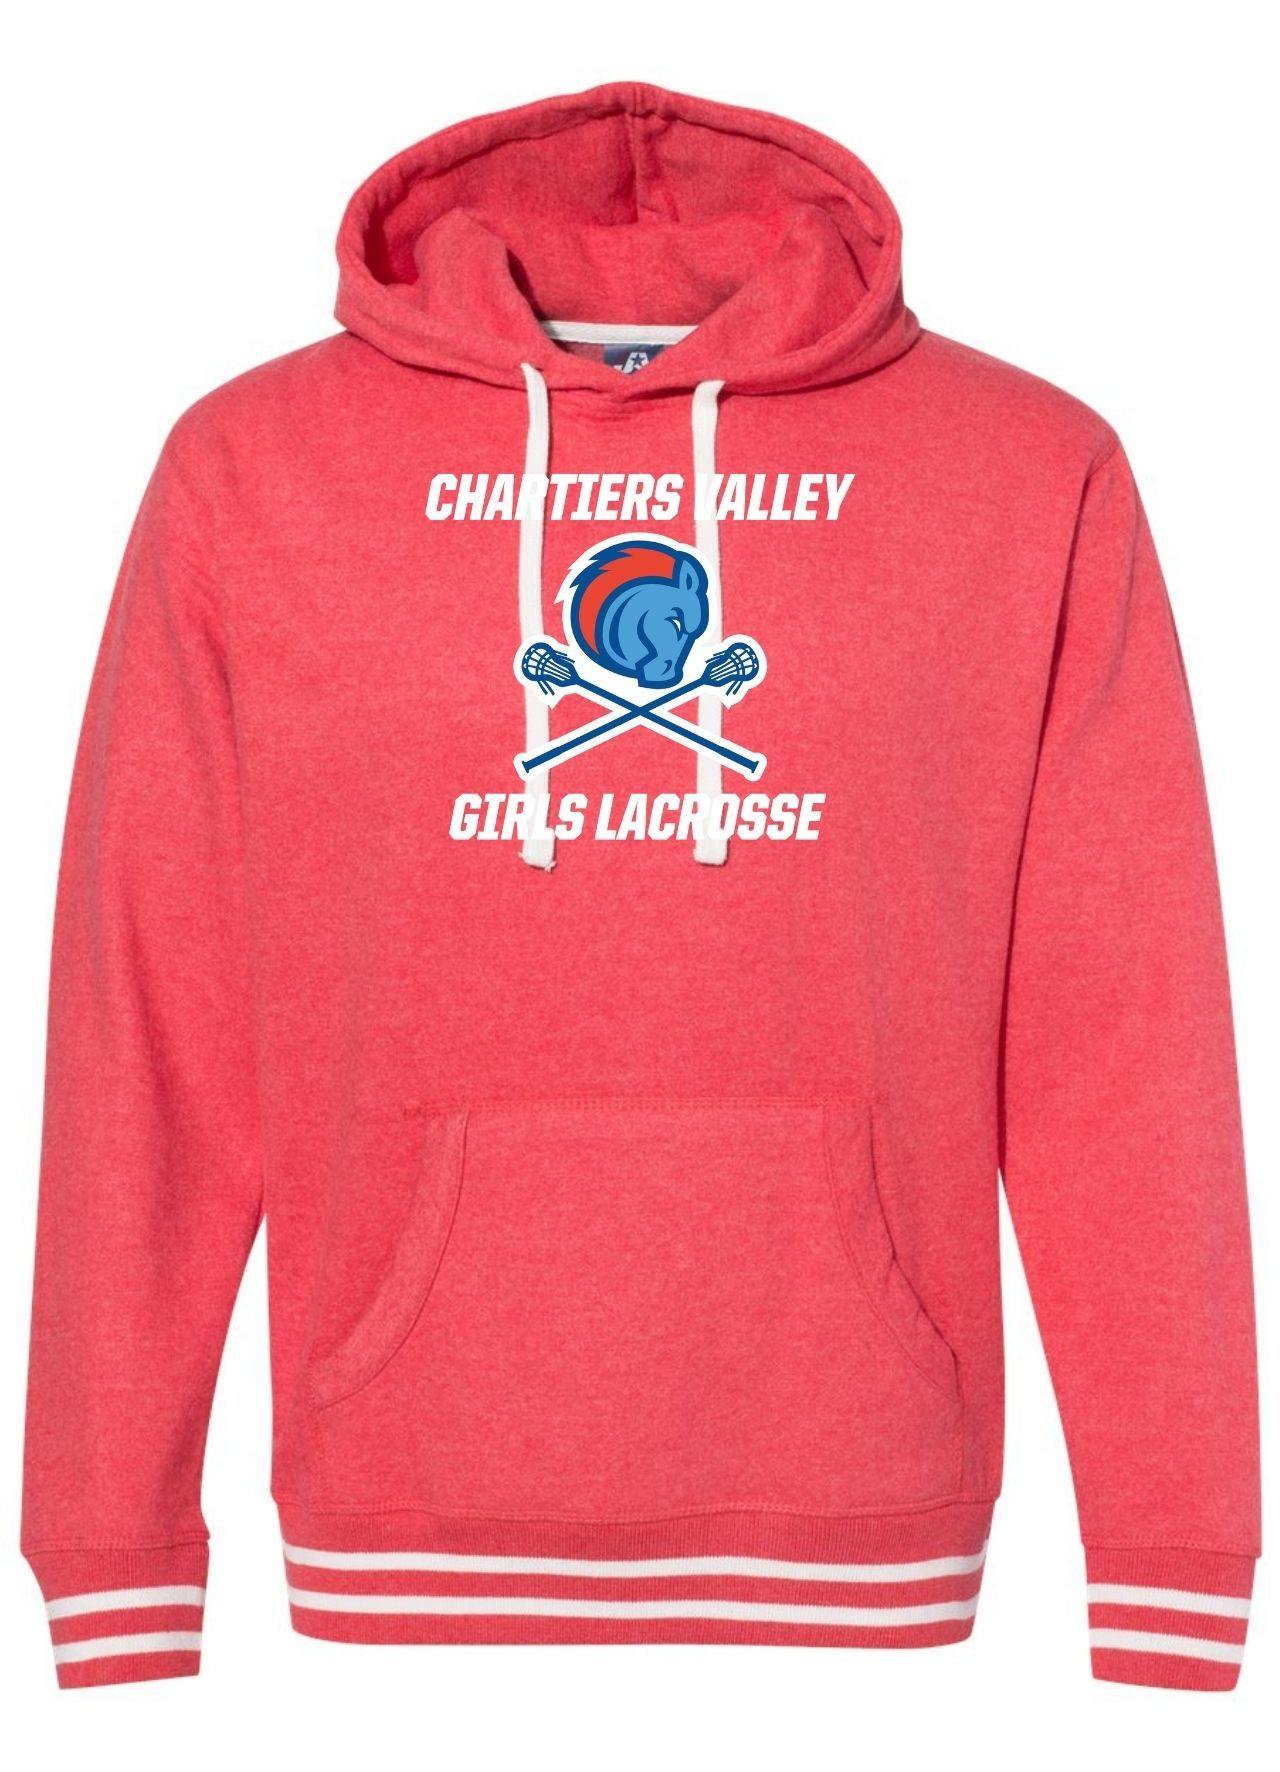 Chartiers Valley Girls J. America - Relay Fleece Hooded Sweatshirt - Red